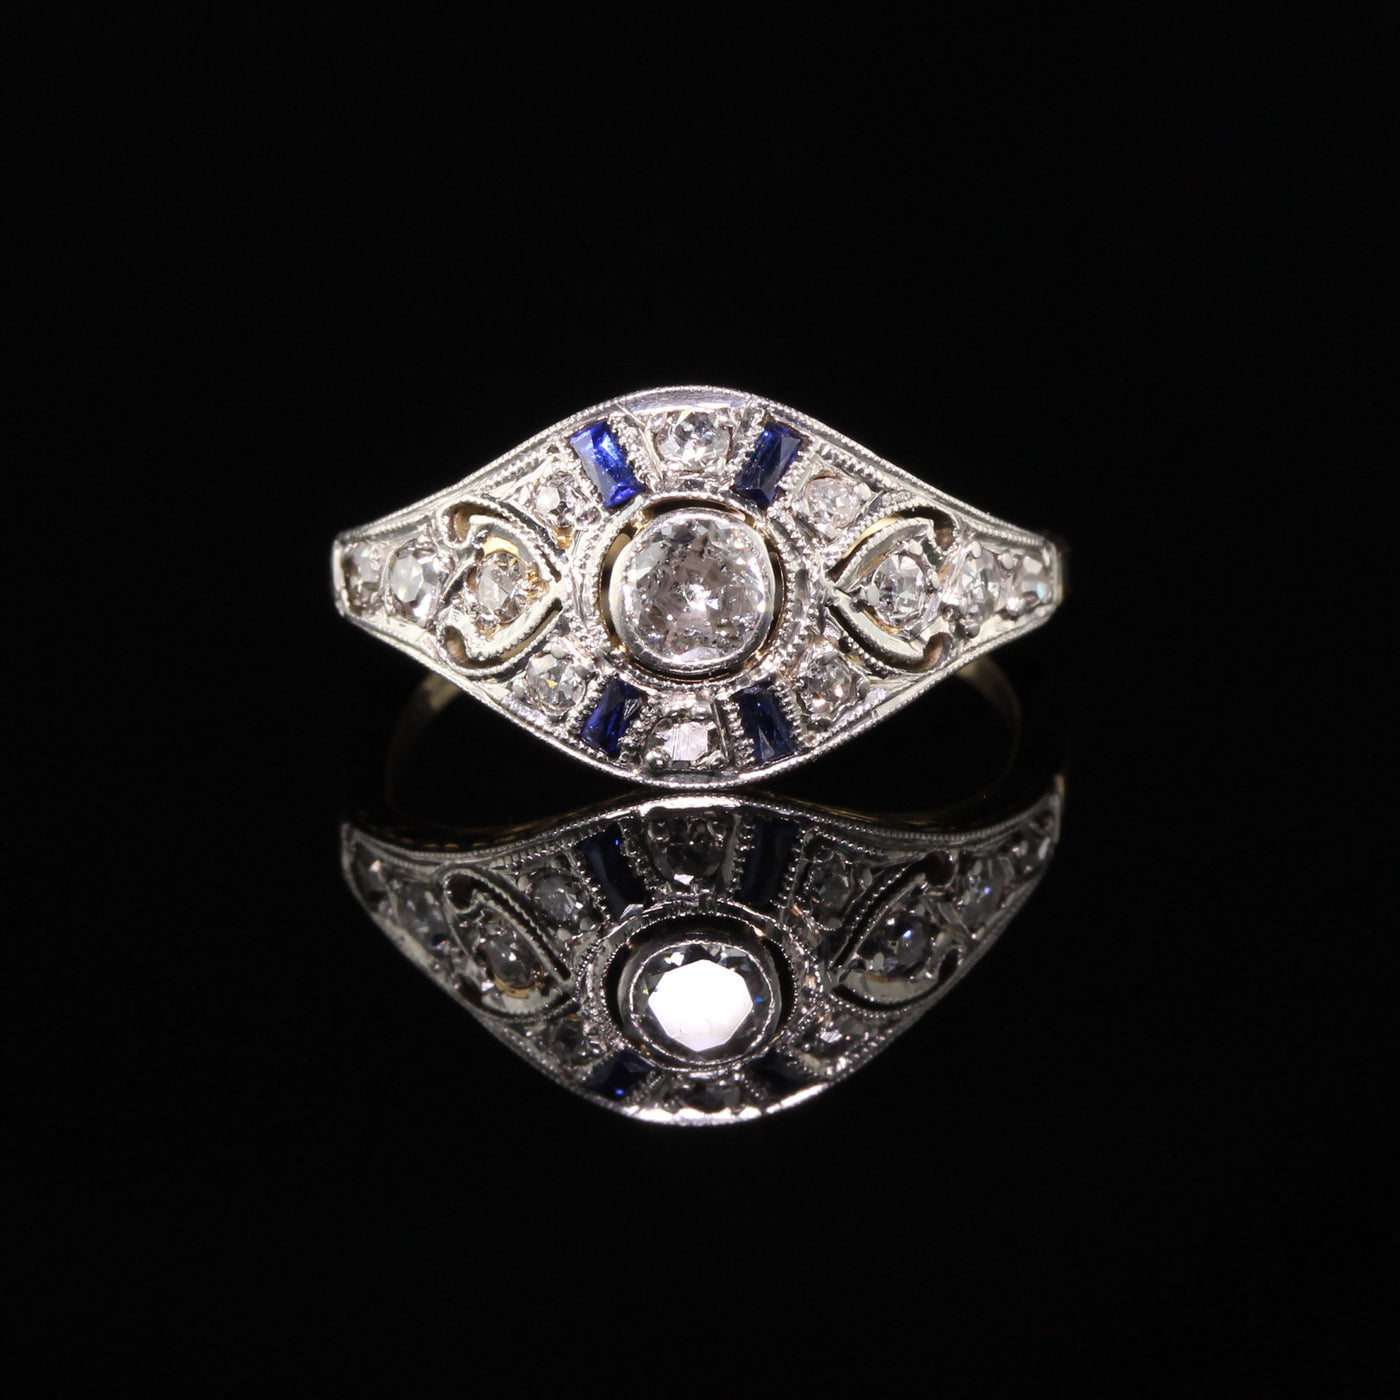 Antique Art Deco 14K Yellow Gold Platinum Diamond and Sapphire Engagement Ring